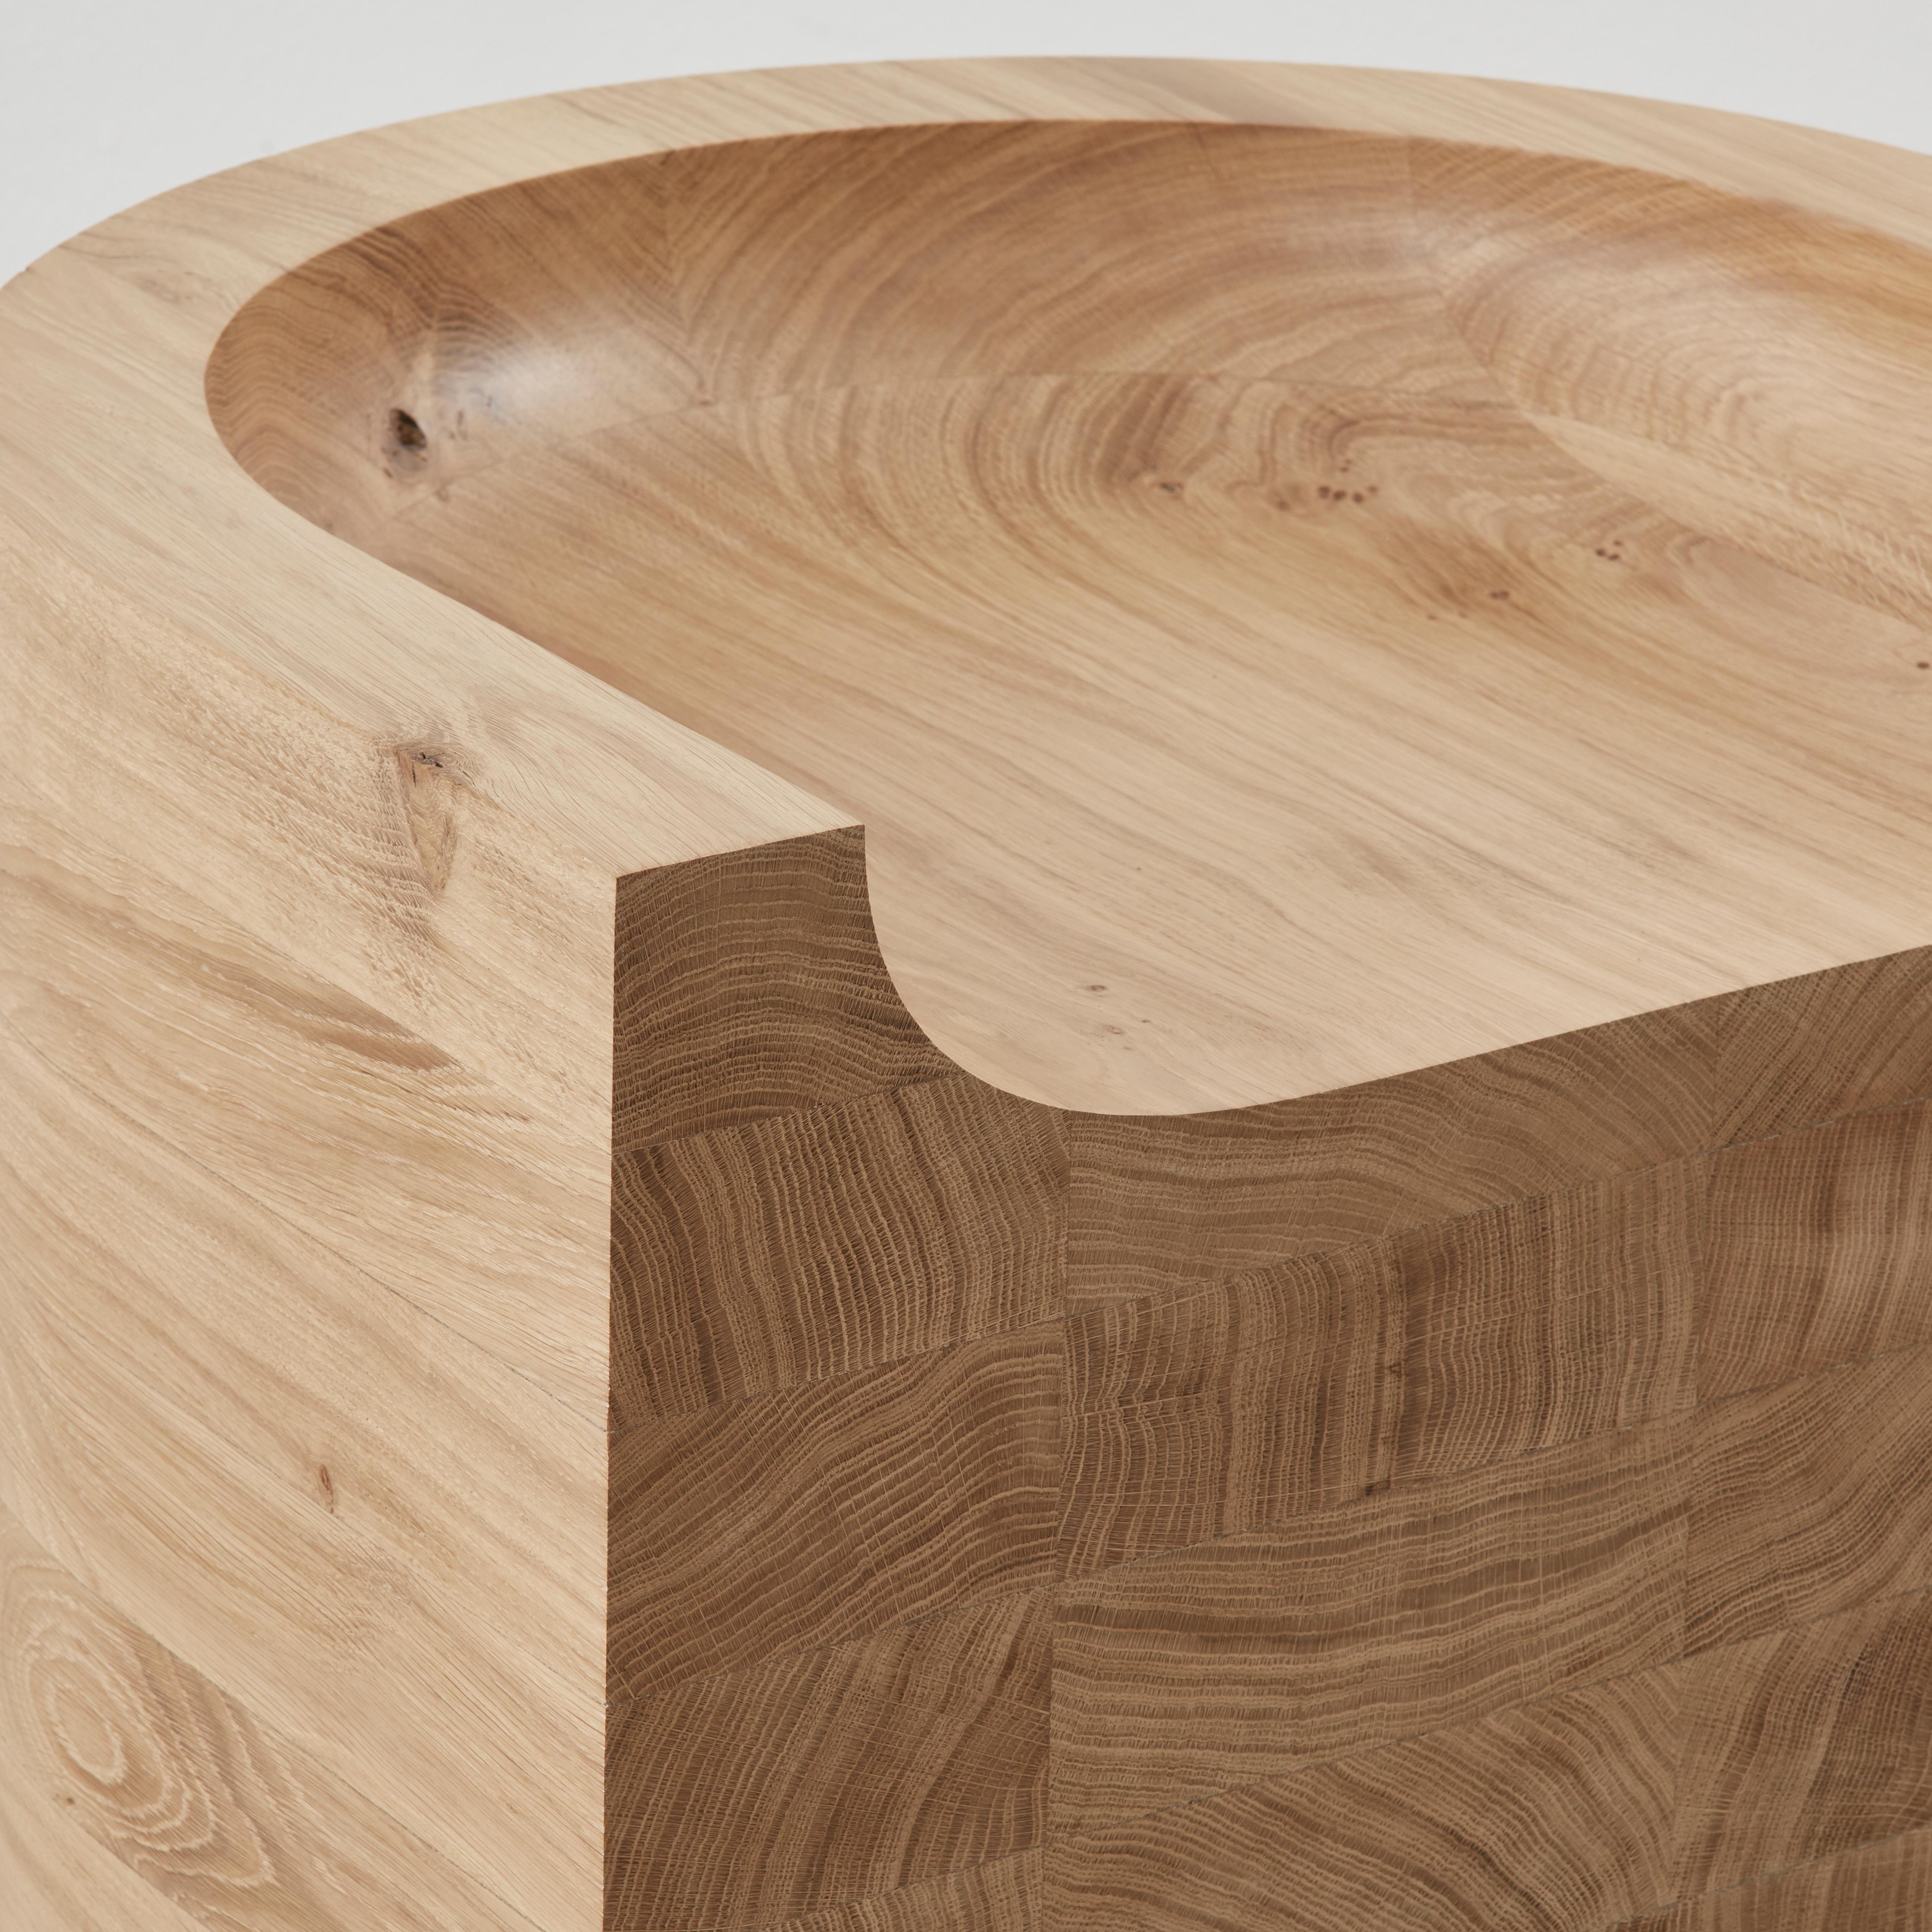 Benni Allan 'Low Chair' in oak by EBBA, UK, 2022 For Sale 7